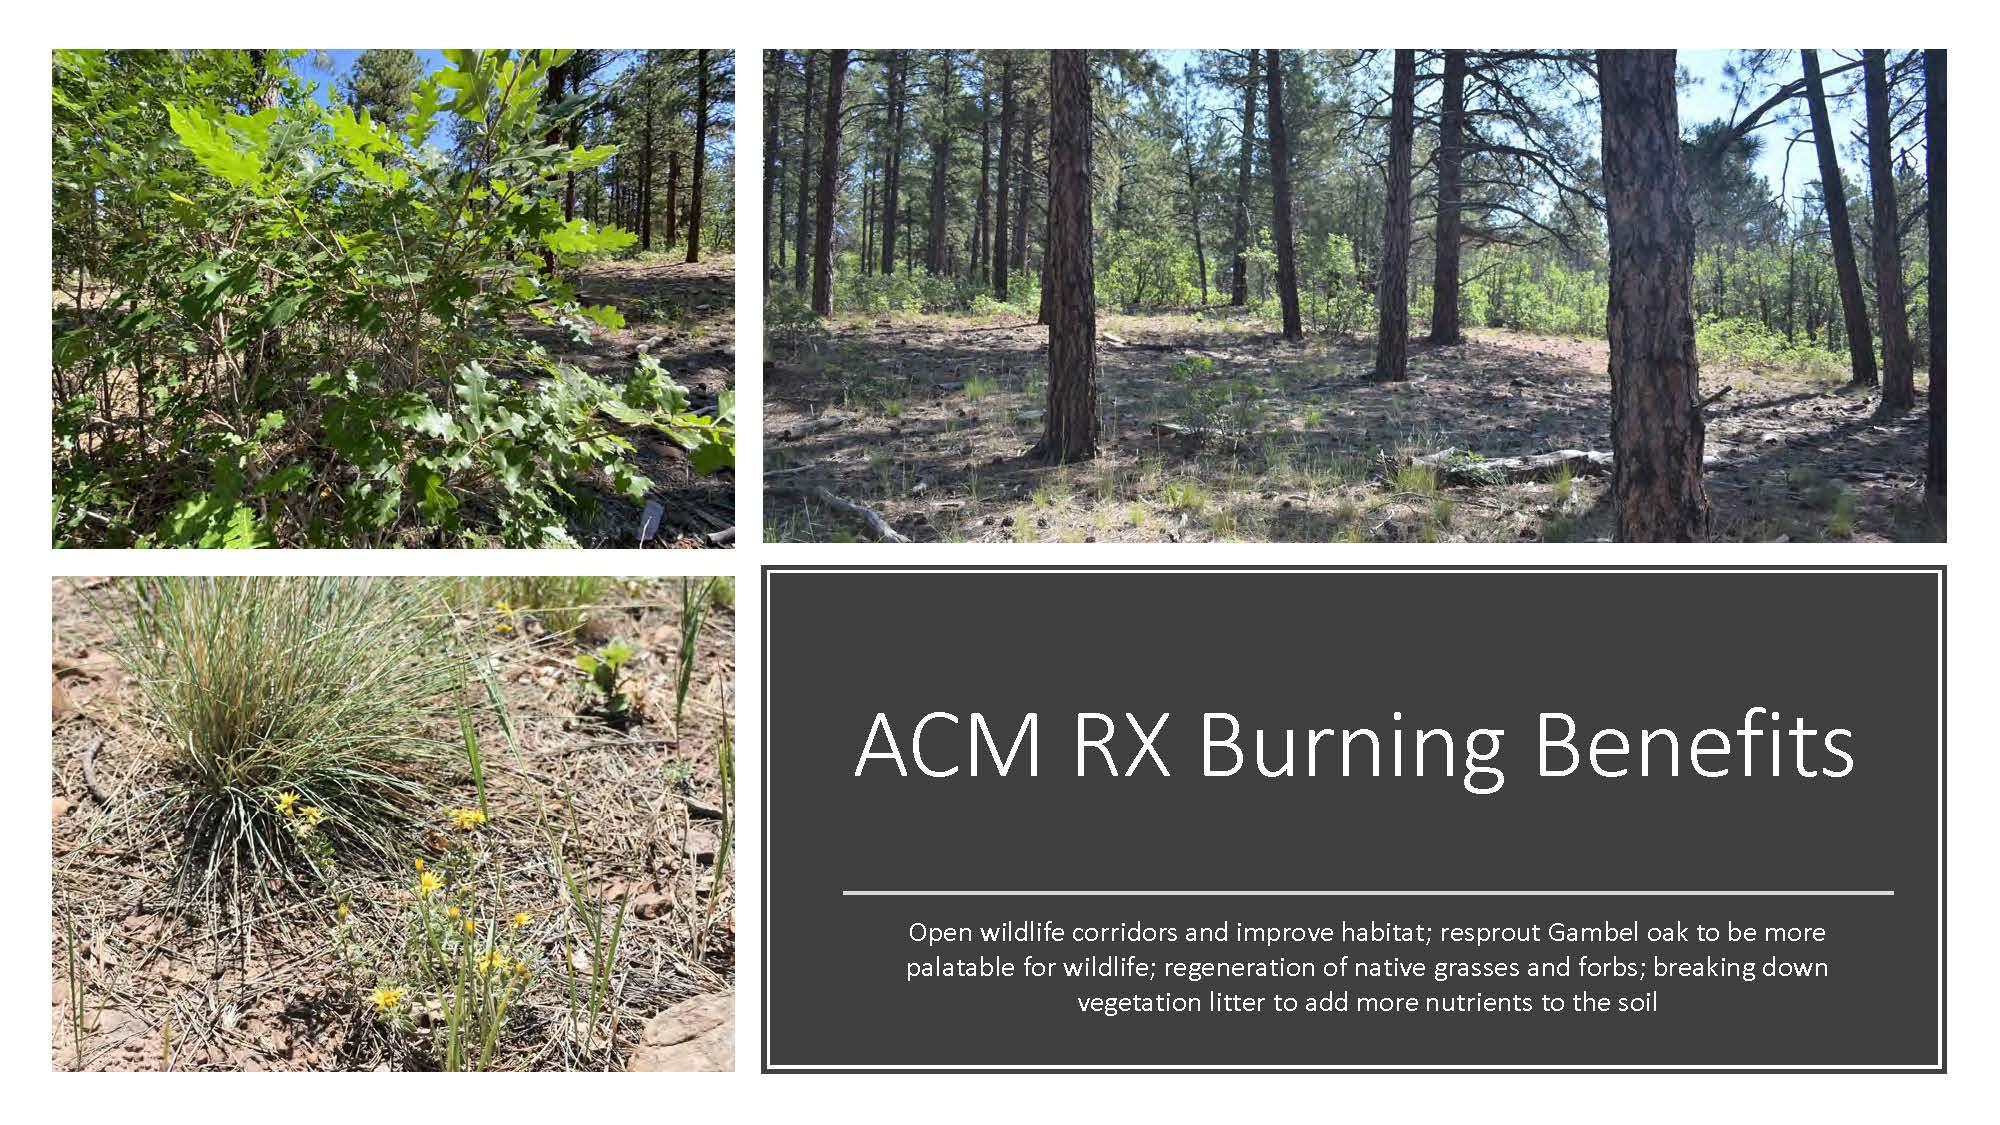 ACM RX burning benefits for vegetation & wildlife 